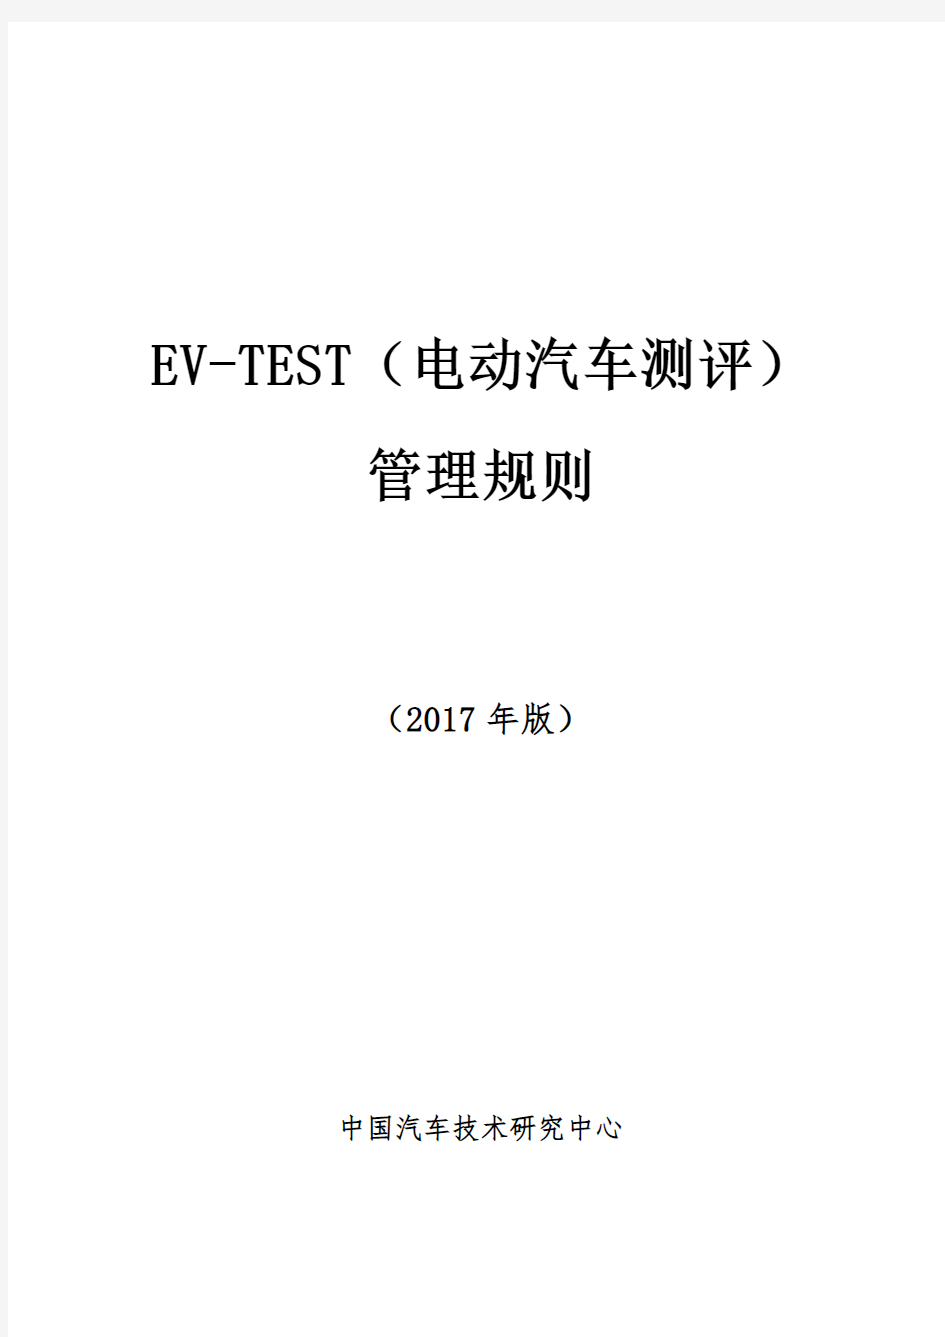 EV-TEST电动汽车测评管理规则(2017年版)